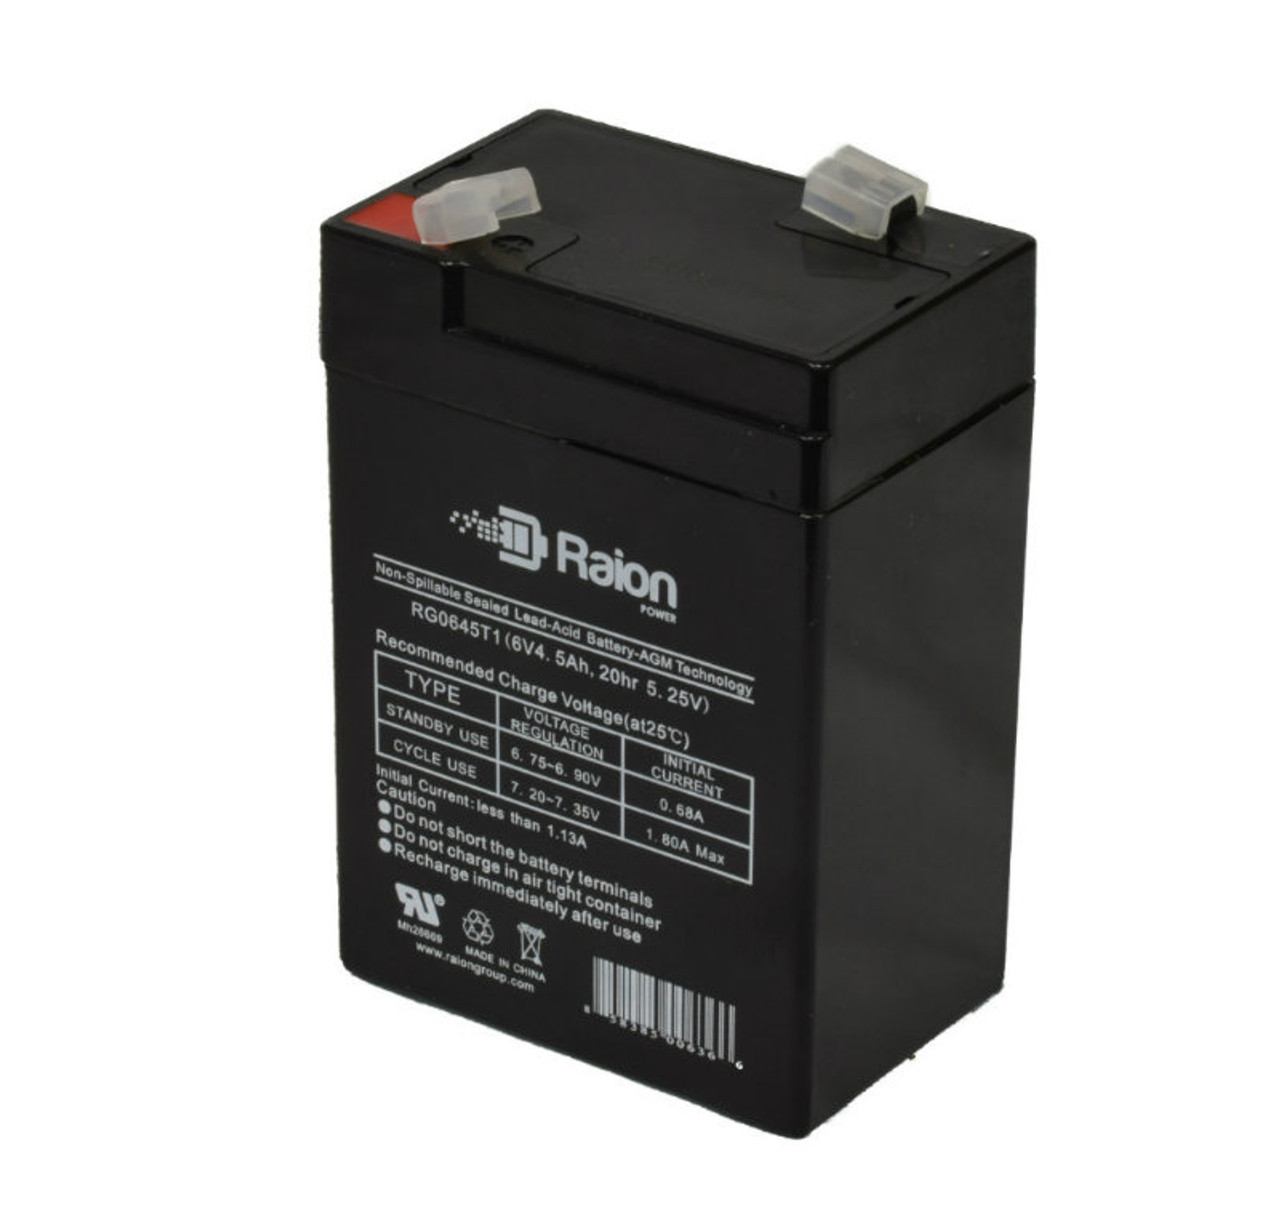 Raion Power RG0645T1 6V 4.5Ah Replacement Battery Cartridge for Sentry Lite 09-985